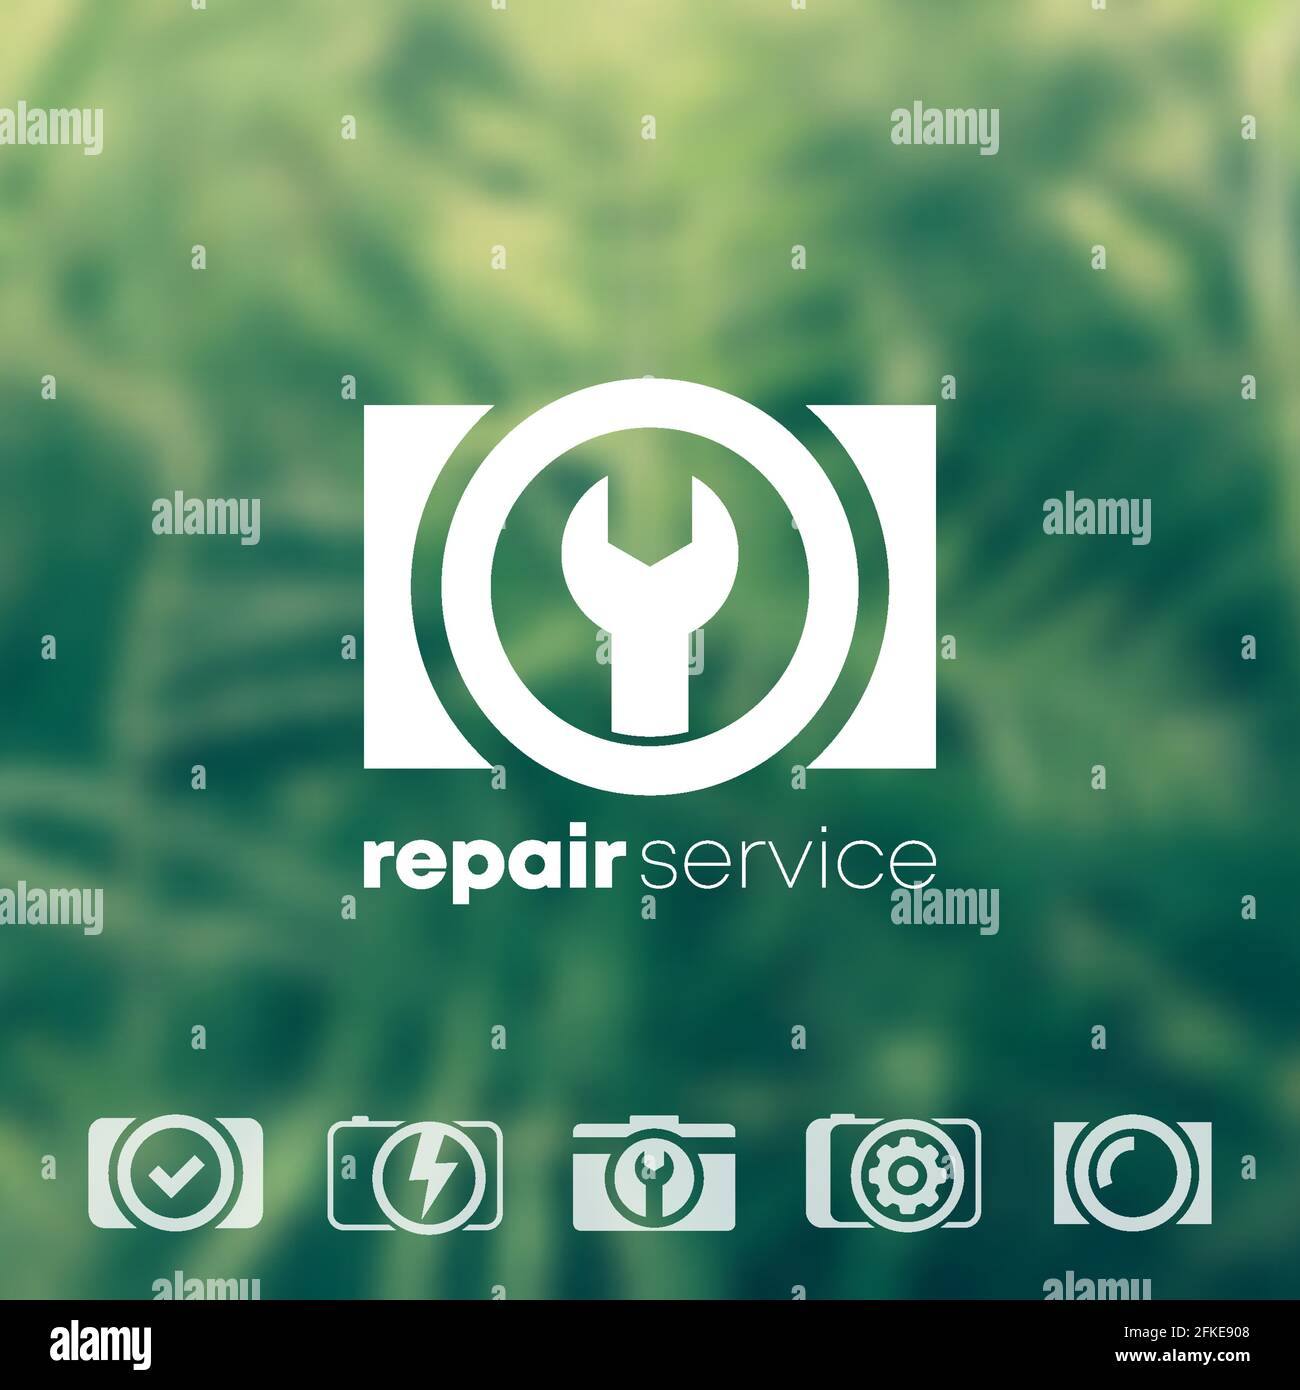 camera repair service logo icons set, vector Stock Vector